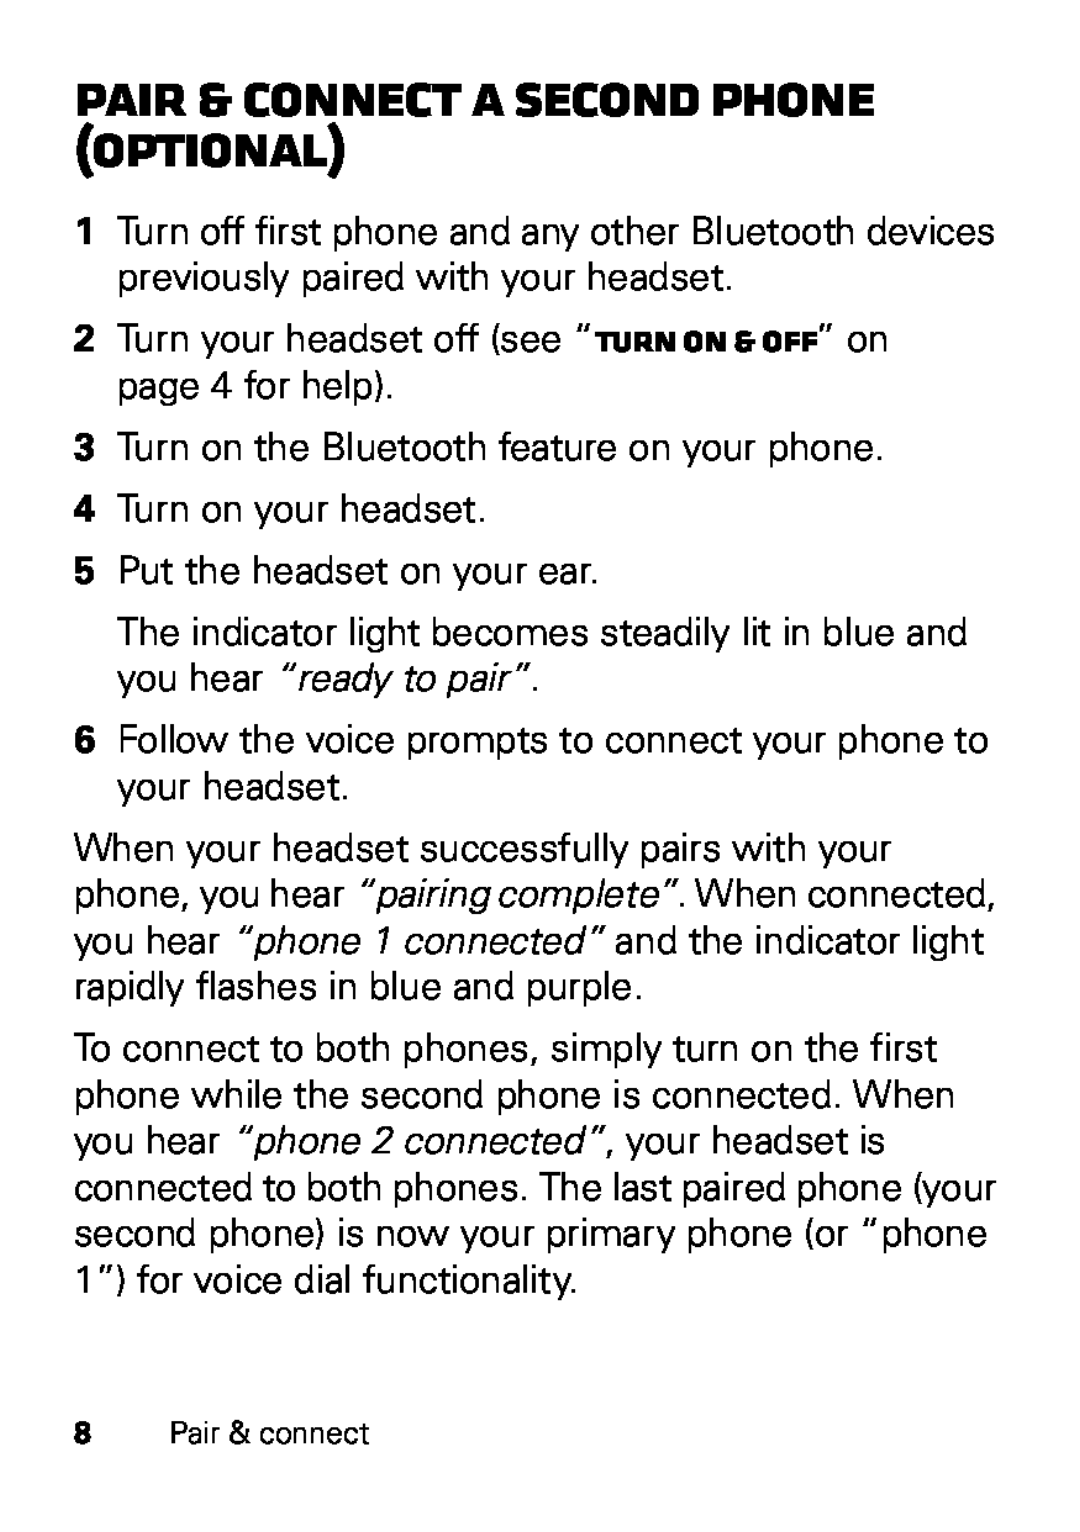 Motorola HX550 manual Pair & connect a second phone Optional 